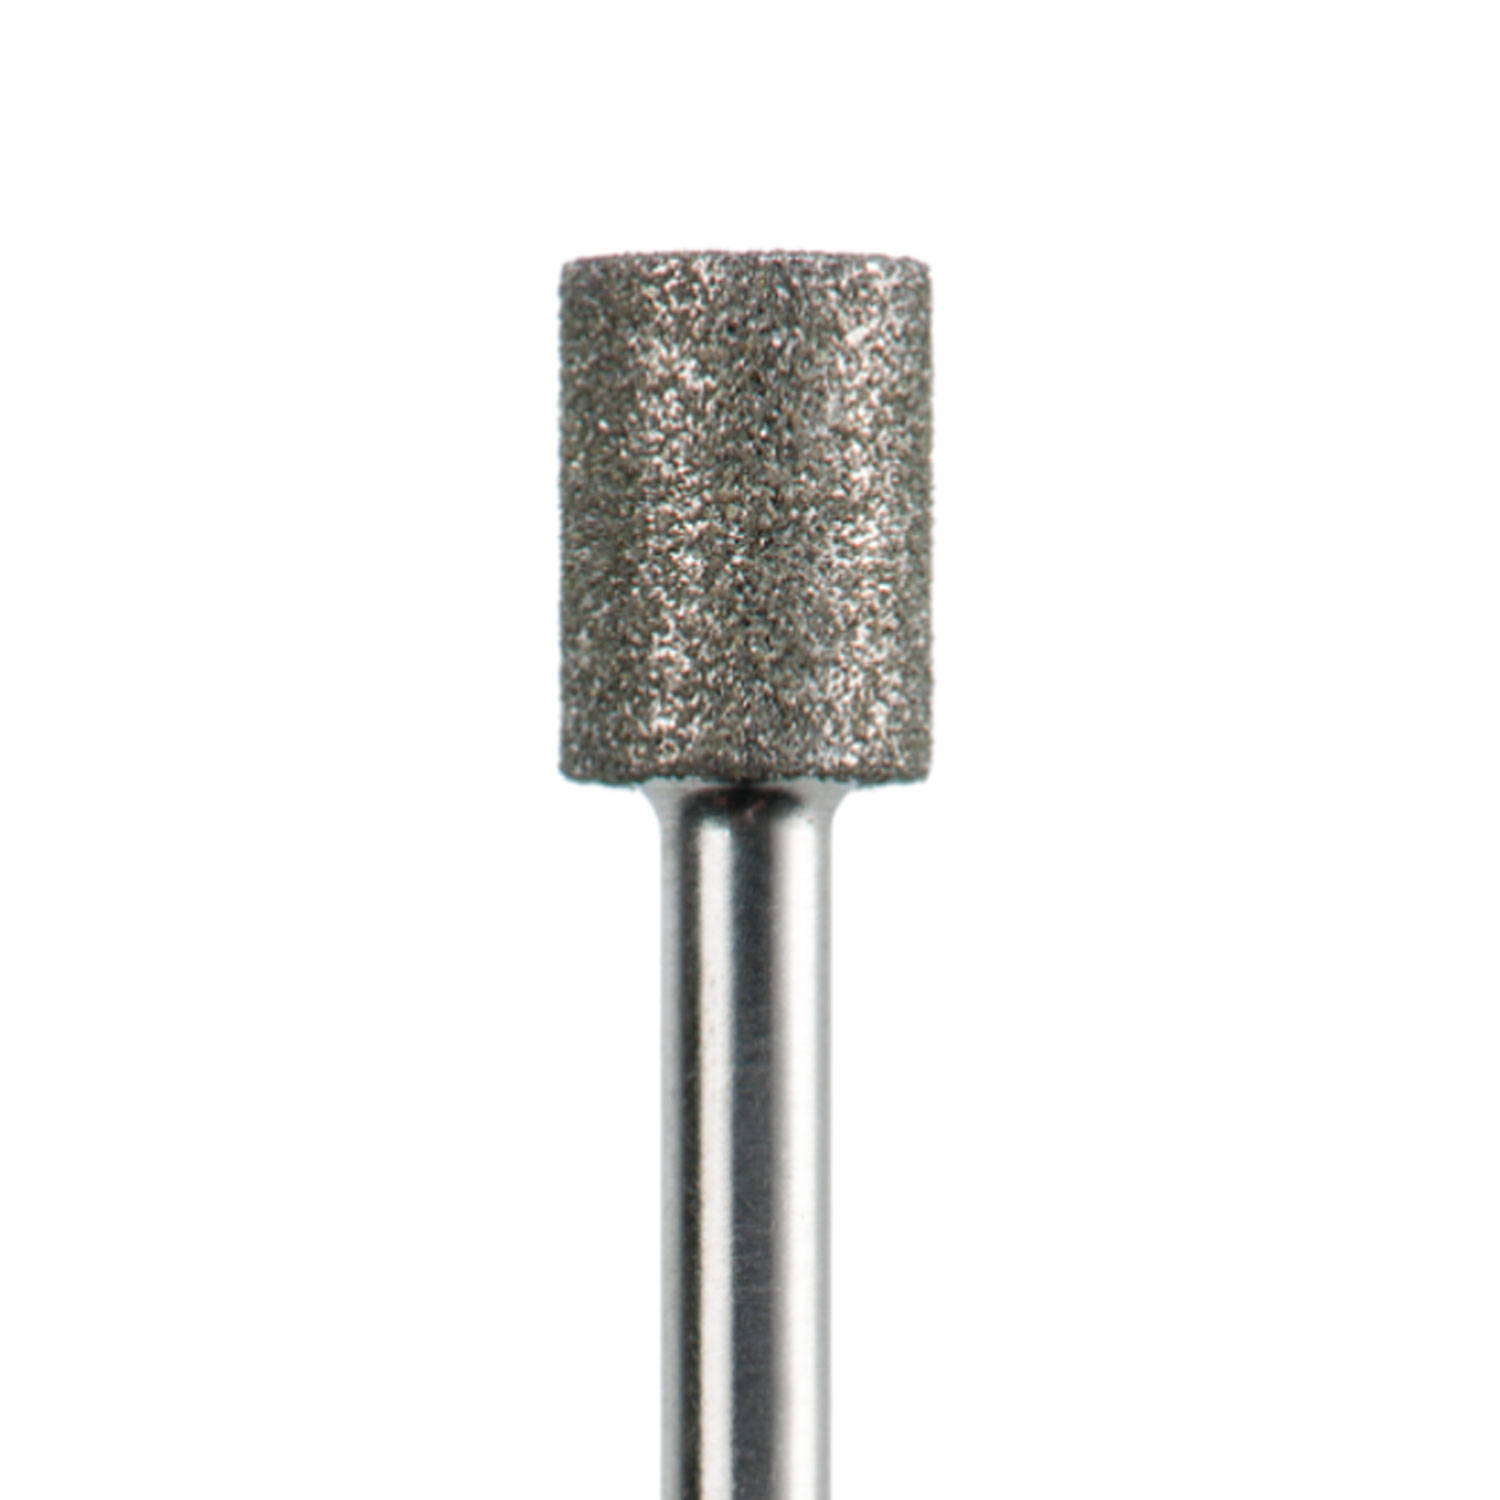 Acurata diamond instruments 524 - medium 5,5mm  AC-145 ACURATA - Arrow 524 Series - Medium (Silver Ring)